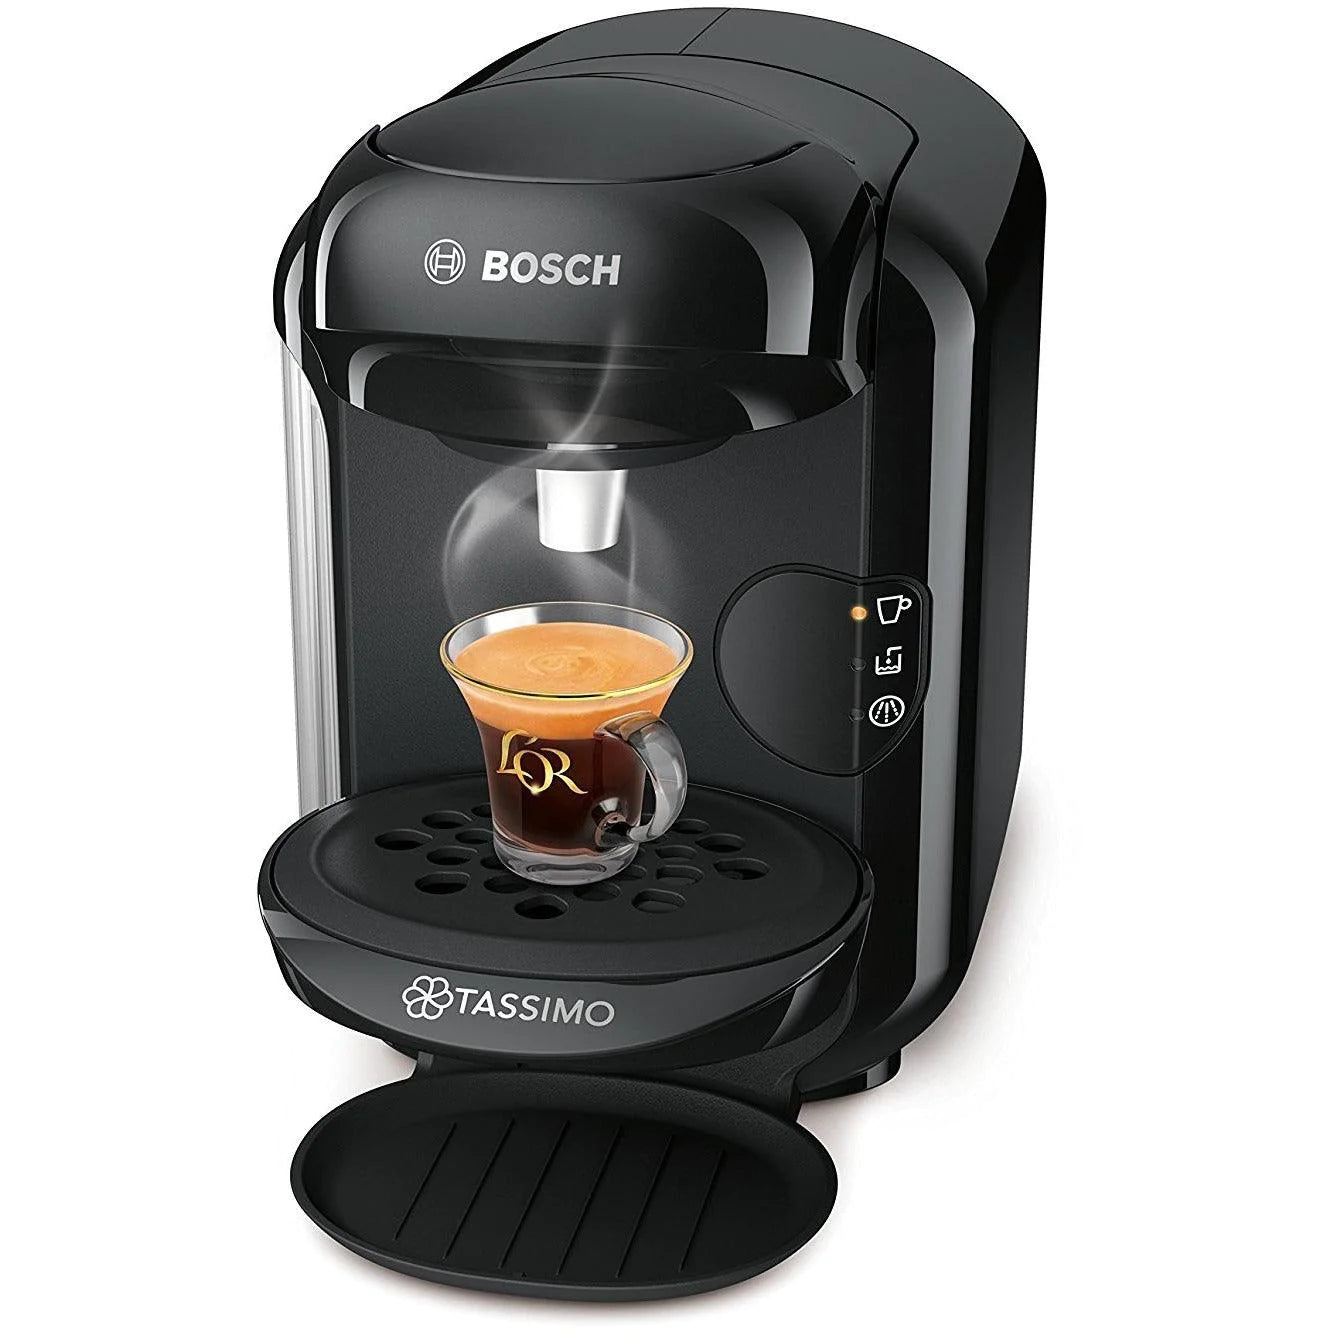 Tassimo Vivy 2 0.7L Pod Coffee Machine - Black | TAS1402GB